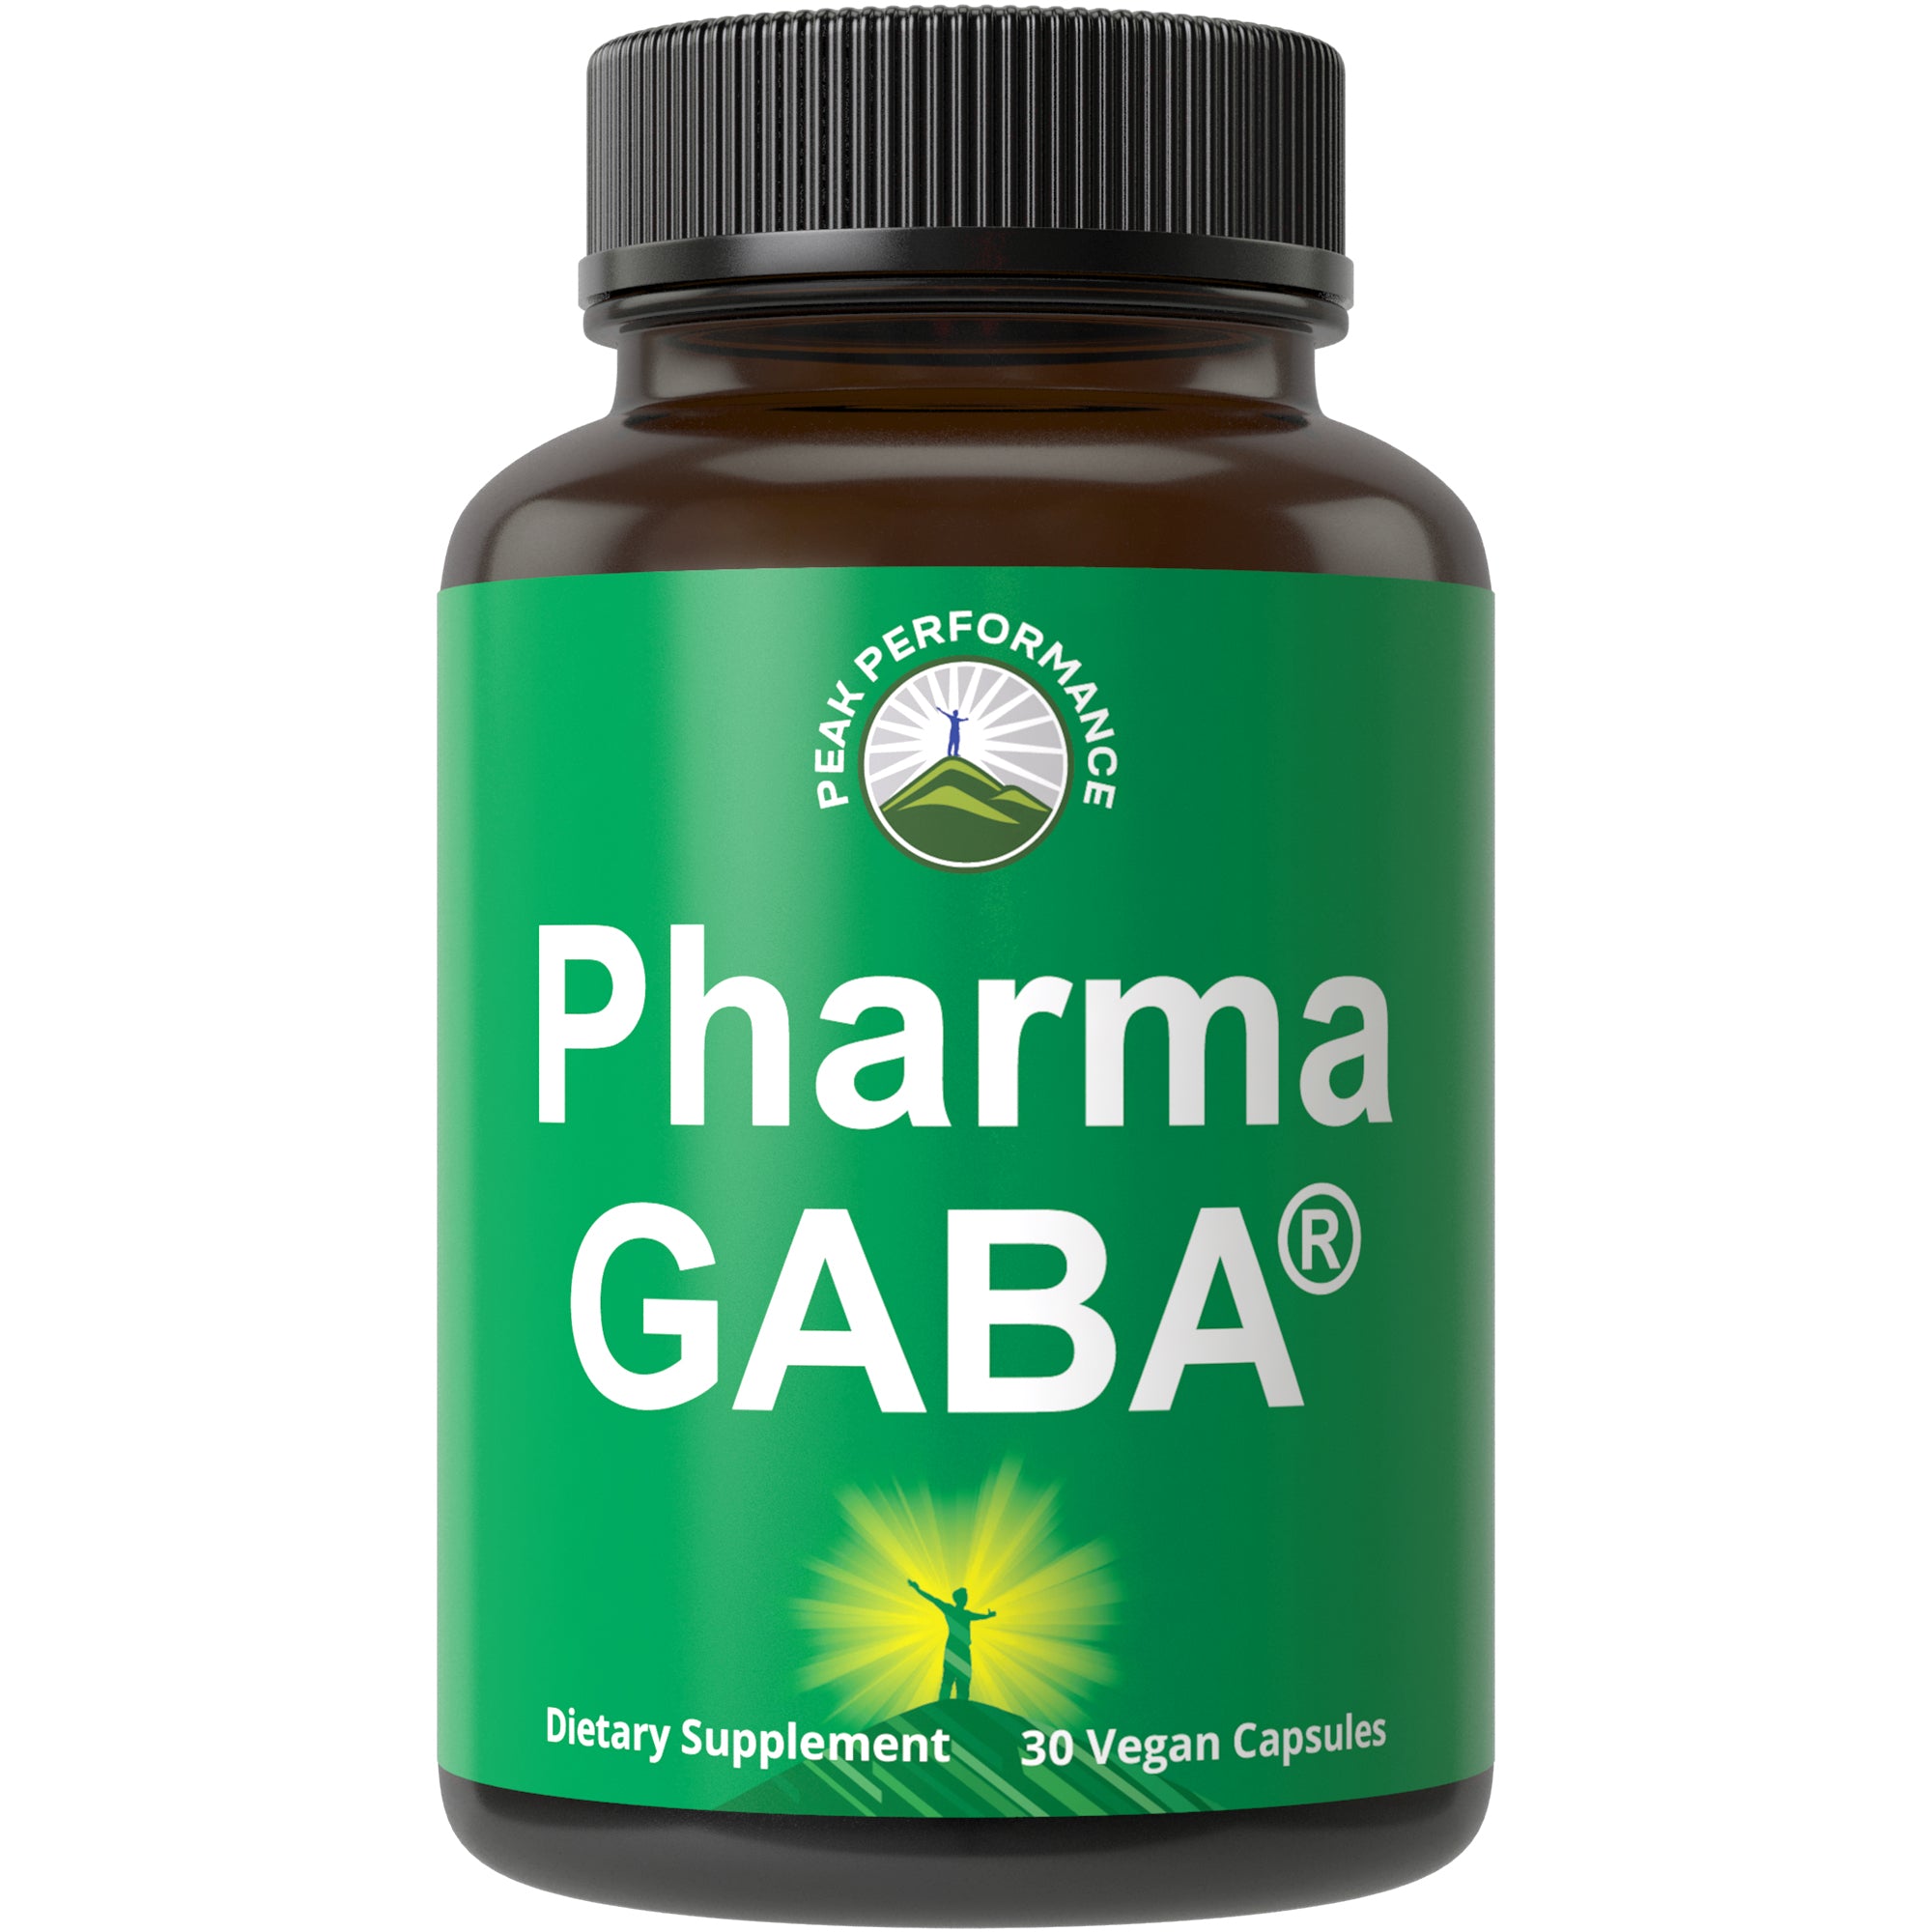 PharmaGaba Capsules